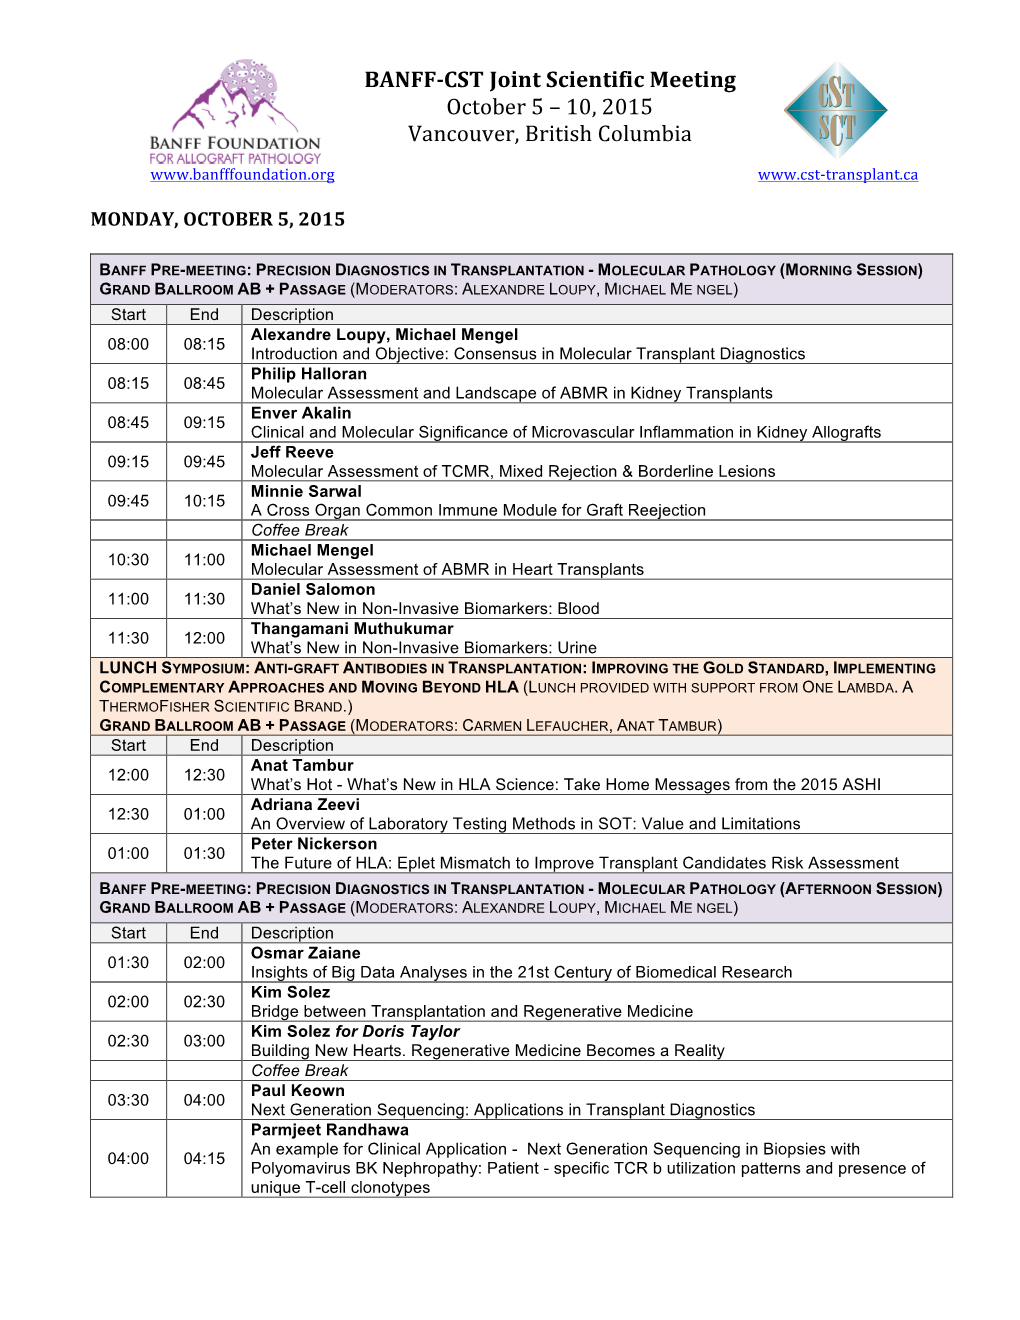 BANFF-CST Joint Scientific Meeting October 5 – 10, 2015 Vancouver, British Columbia